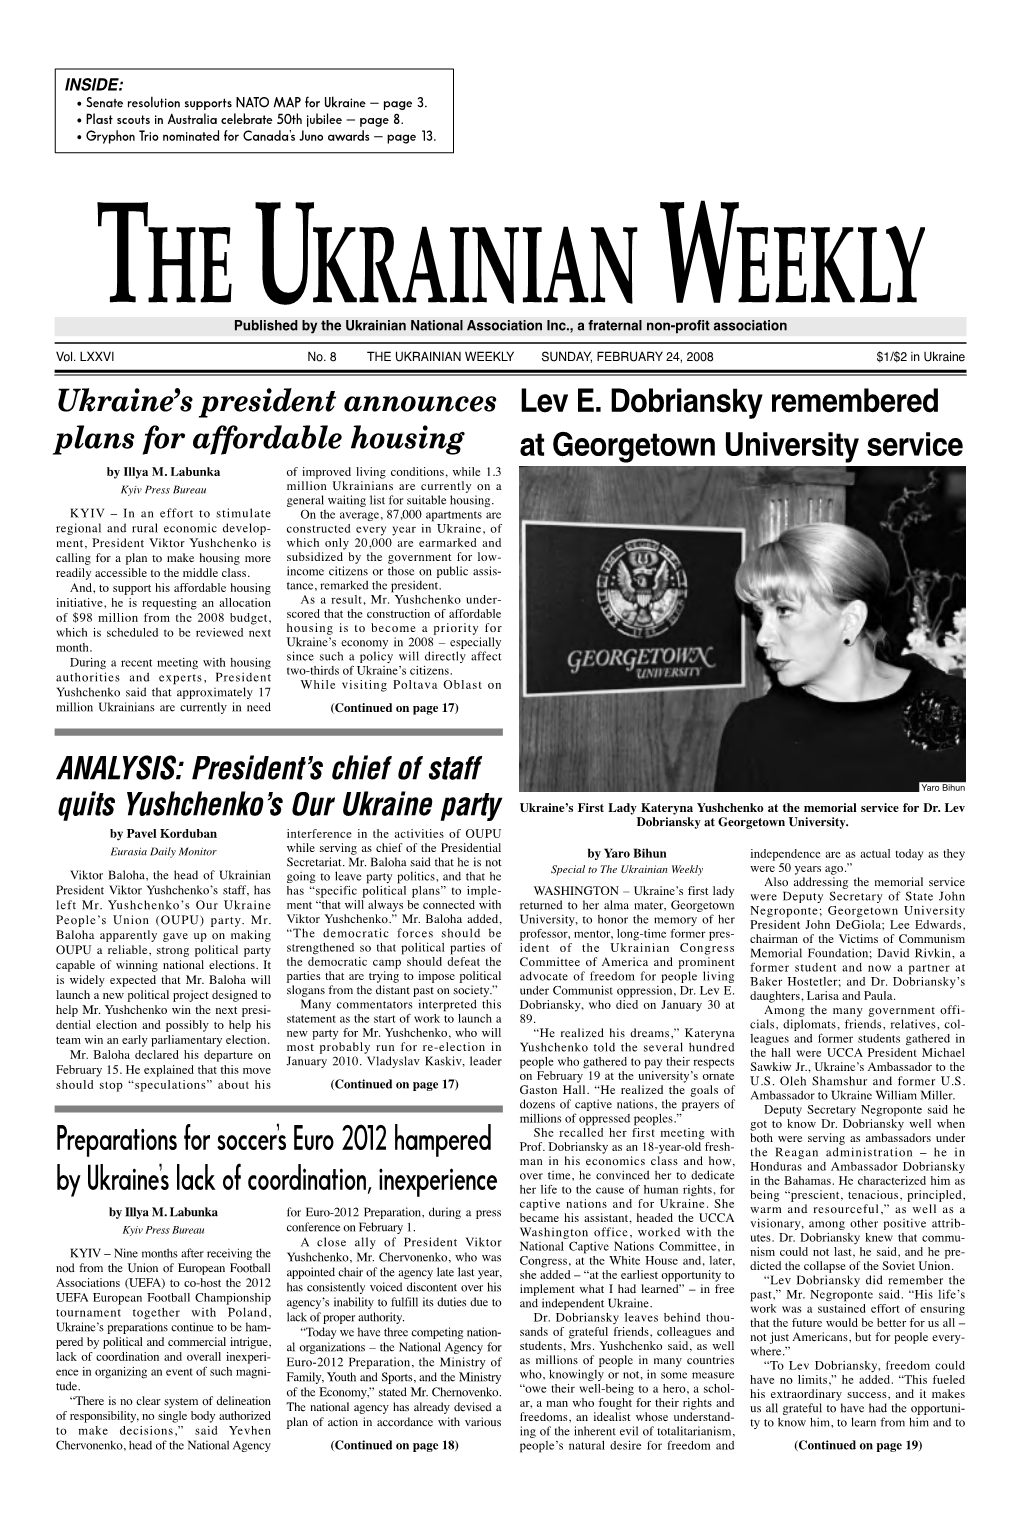 The Ukrainian Weekly 2008, No.8